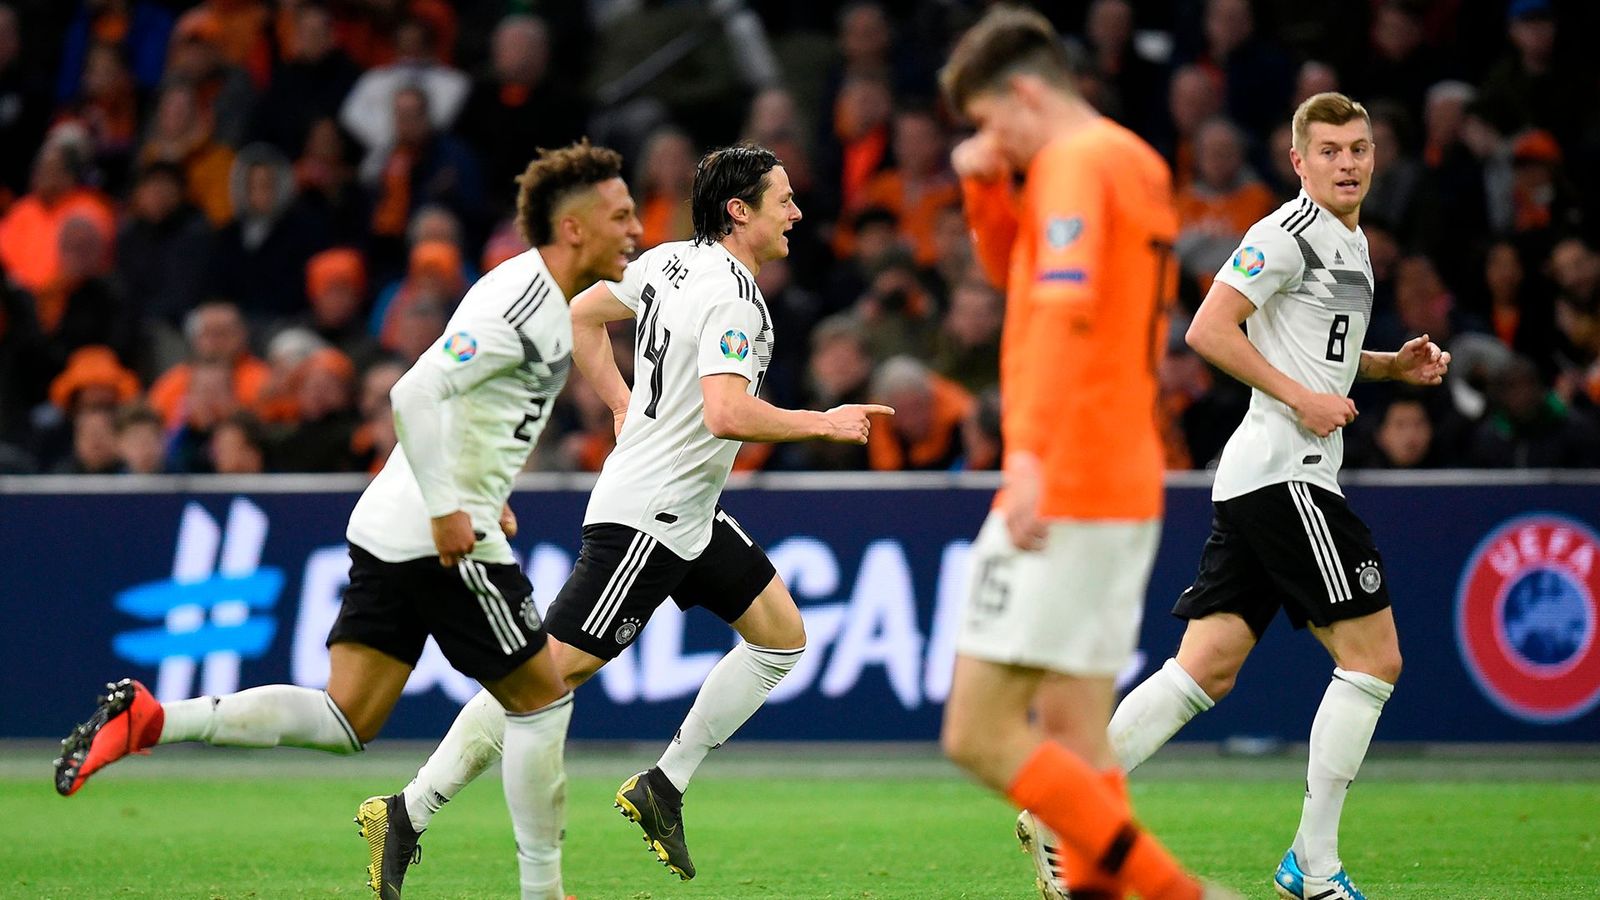 Netherlands 2 - 3 Germany - Match Report & Highlights